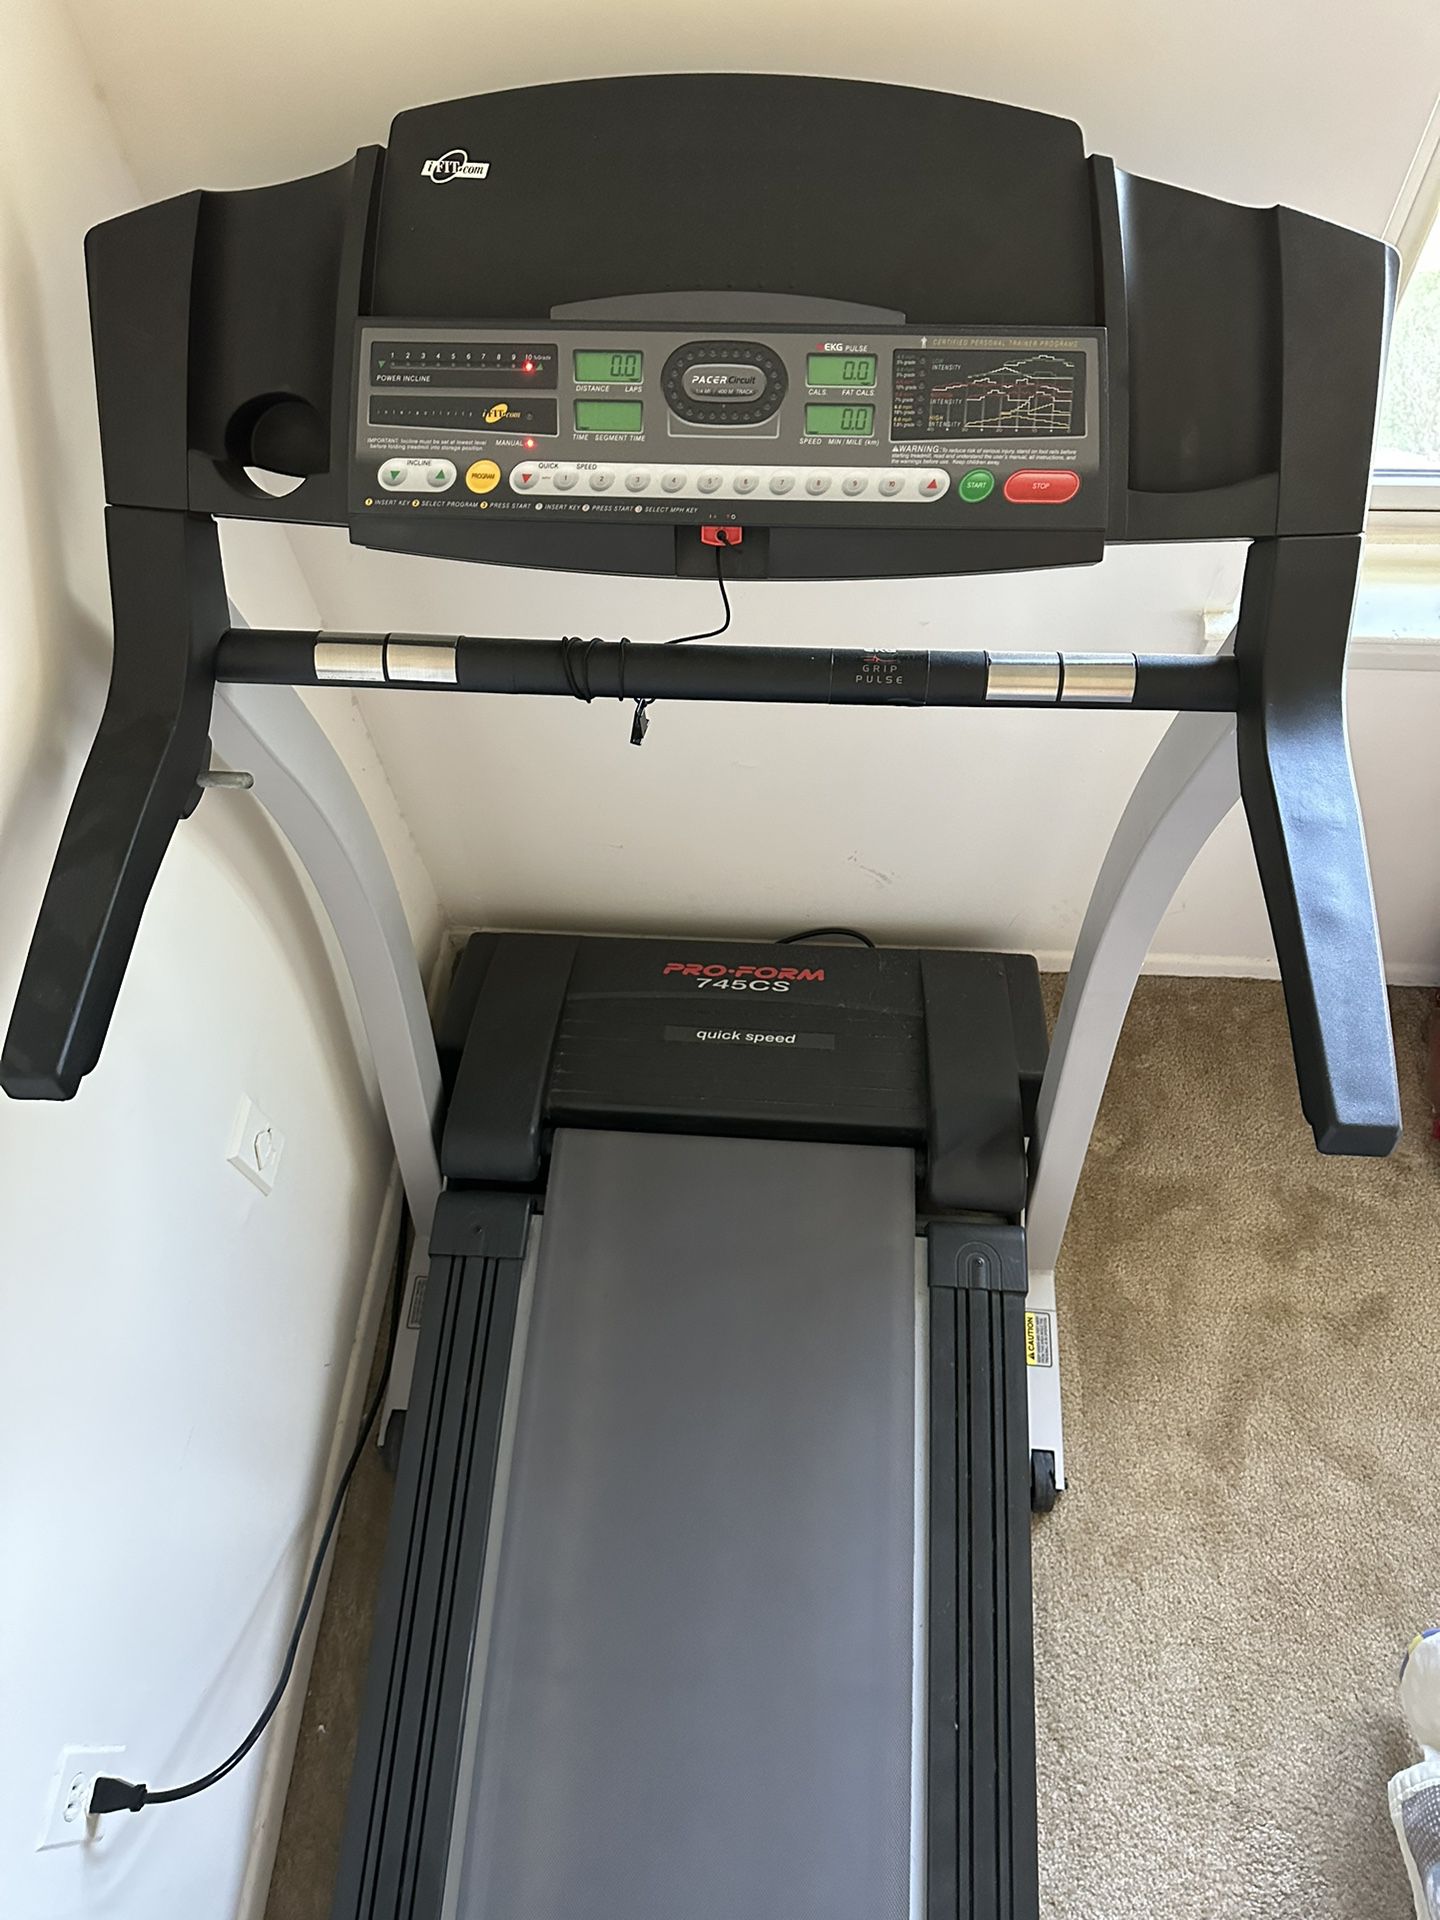 Treadmill With Incline & Heartbeat Sensor